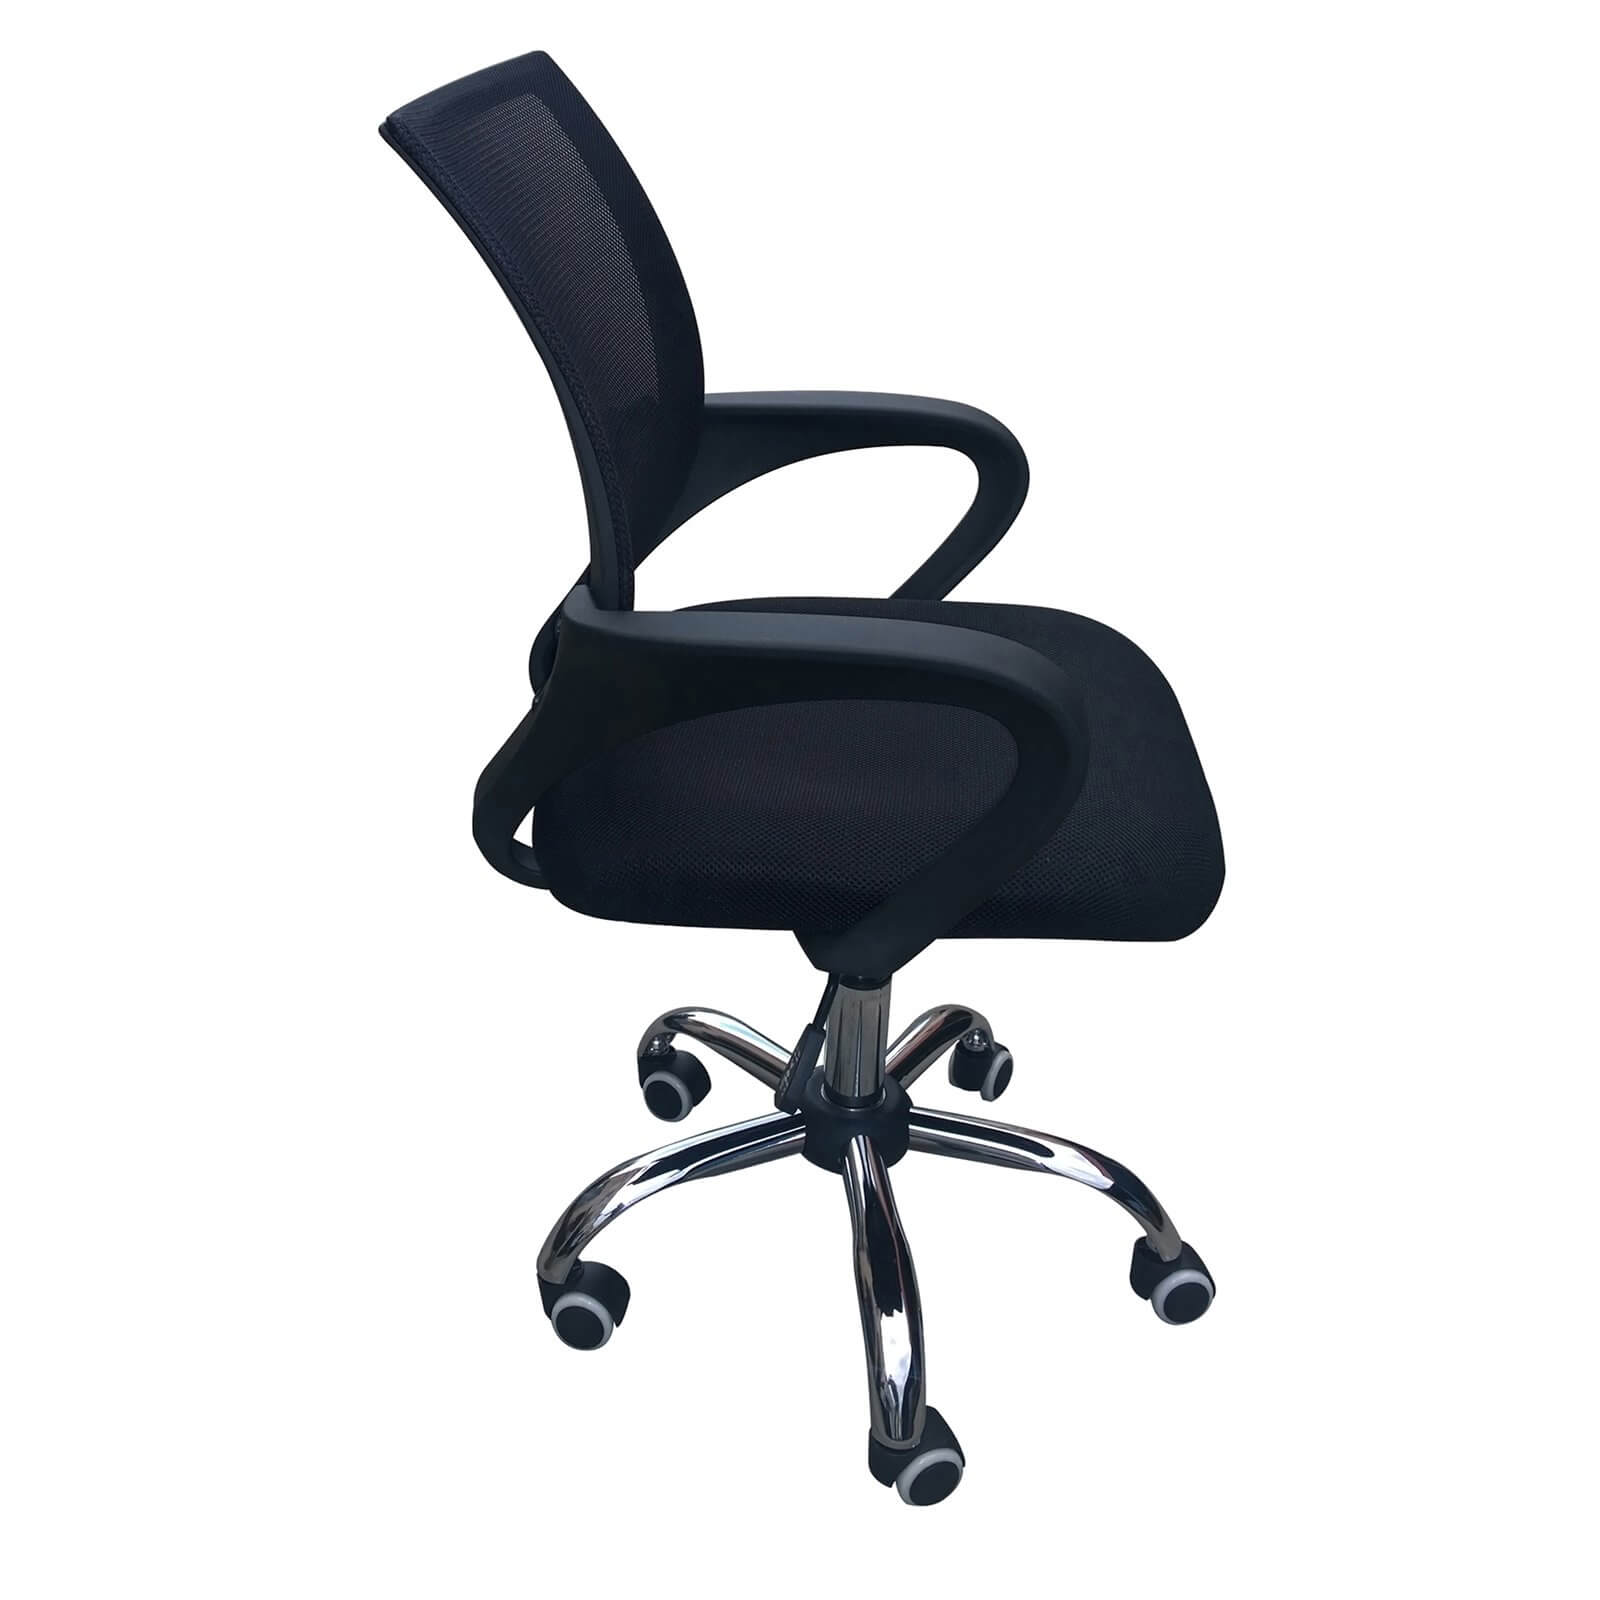 Tate Mesh Back Office Chair - Black